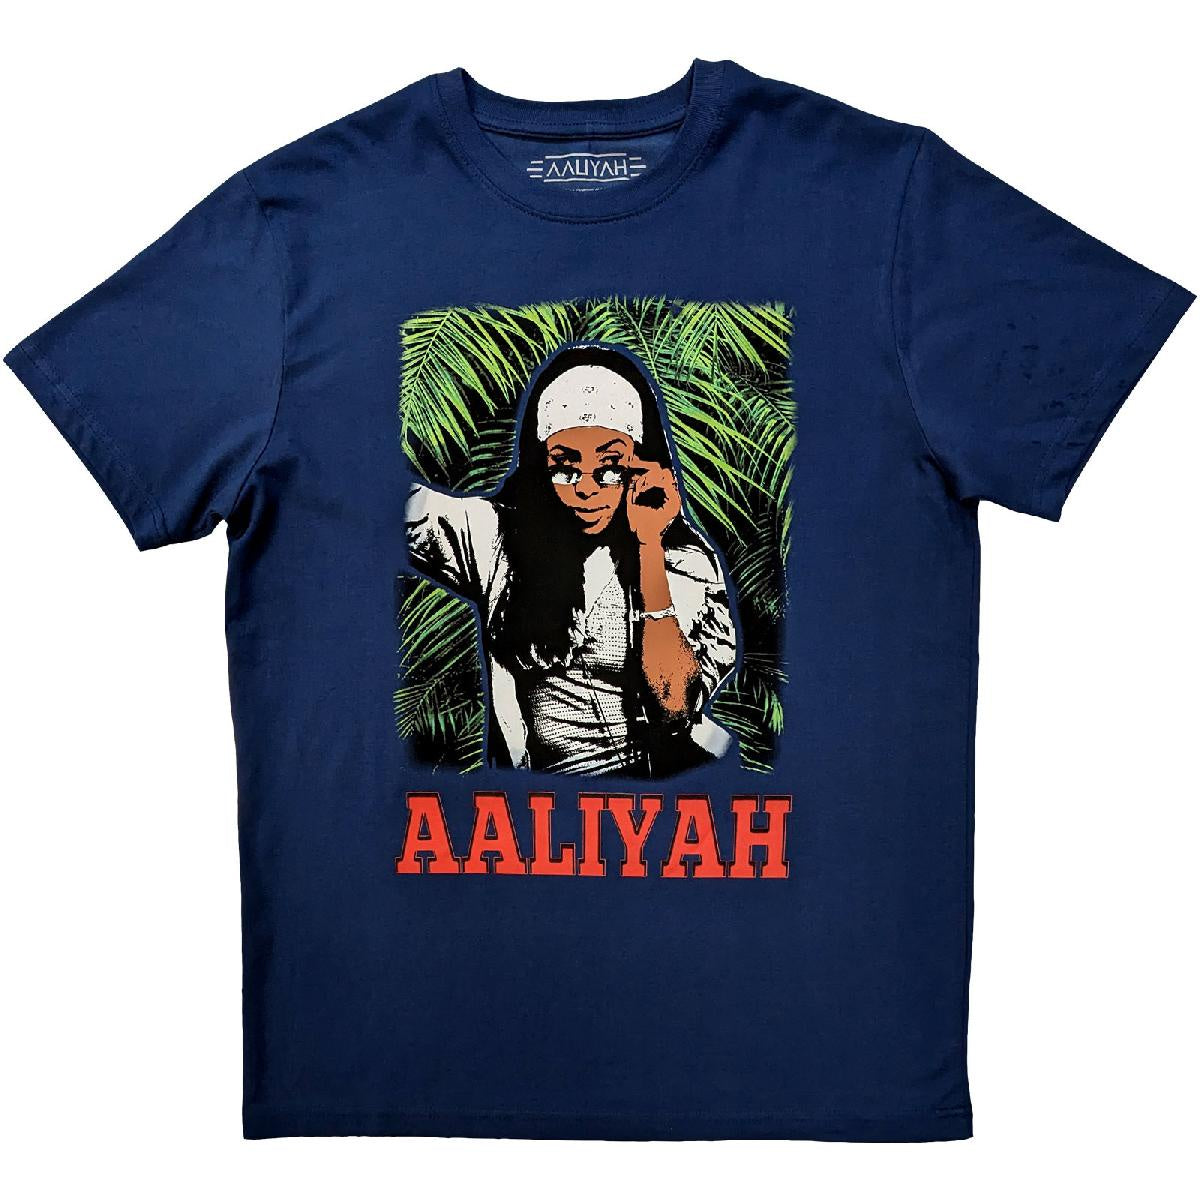 AALIYAH - Foliage Blue T-Shirt